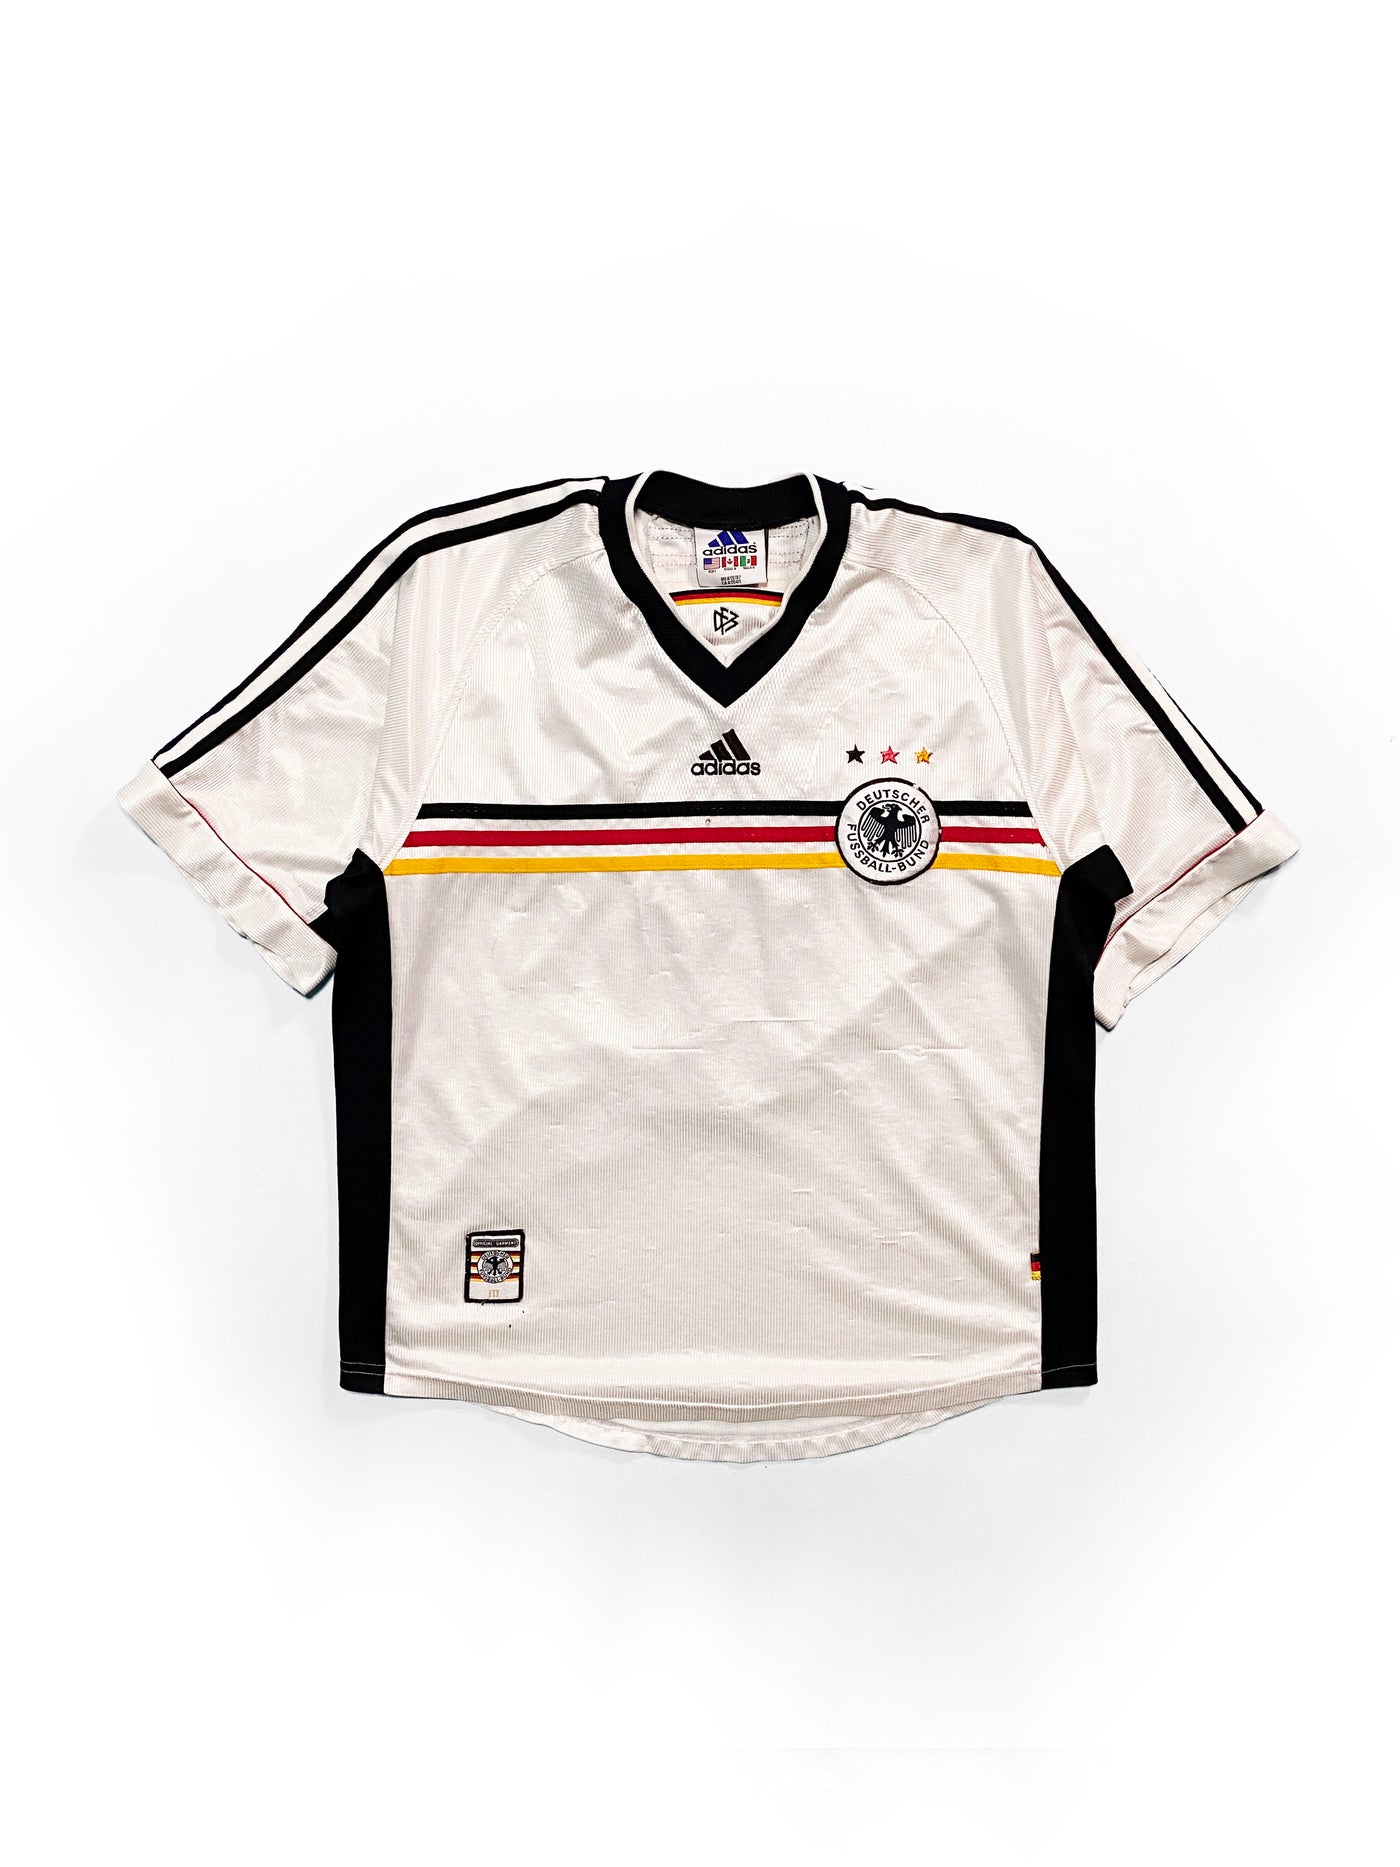 Vintage 90s Adidas Germany Soccer Jersey